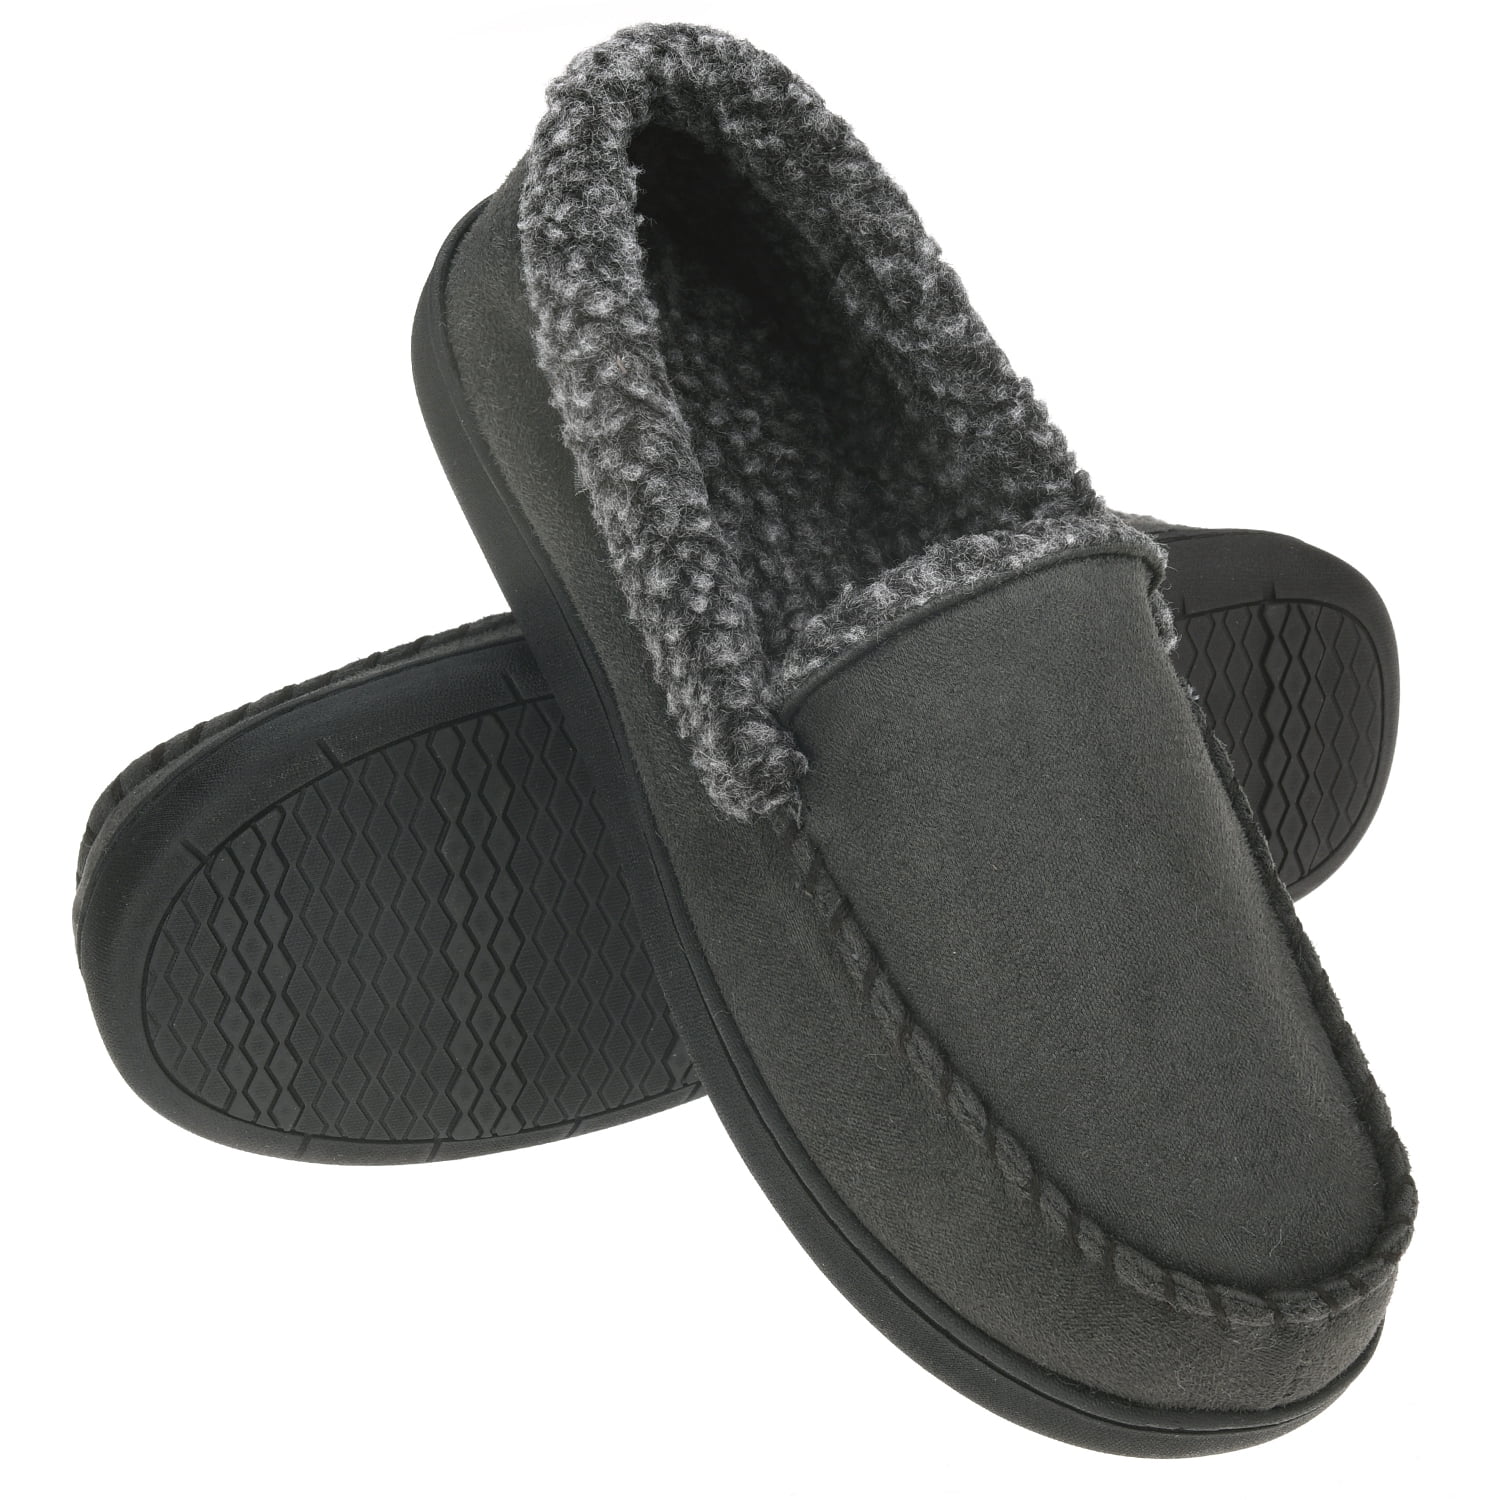 men's loafer style slippers